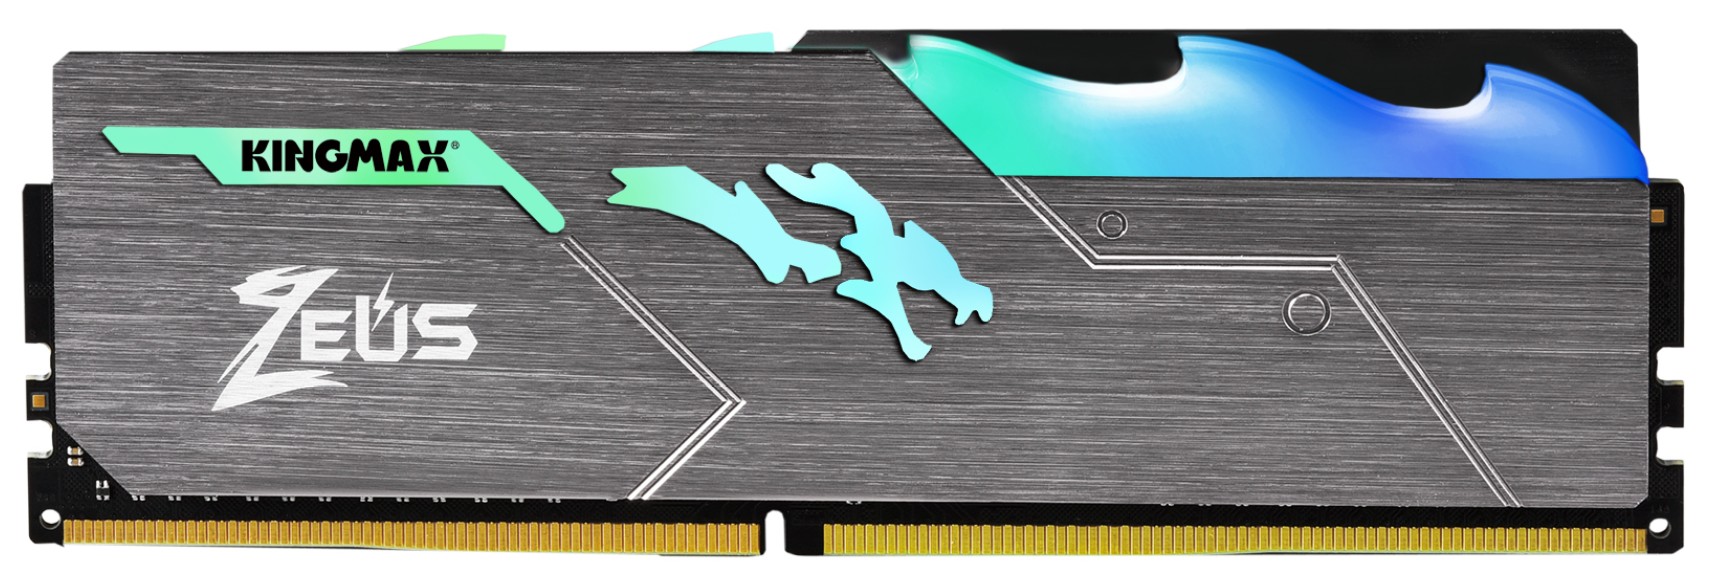 Kingmax Zeus Dragon DDR4 RGB memory 2666MHz 3000MHz 3200MHz 3466MHz